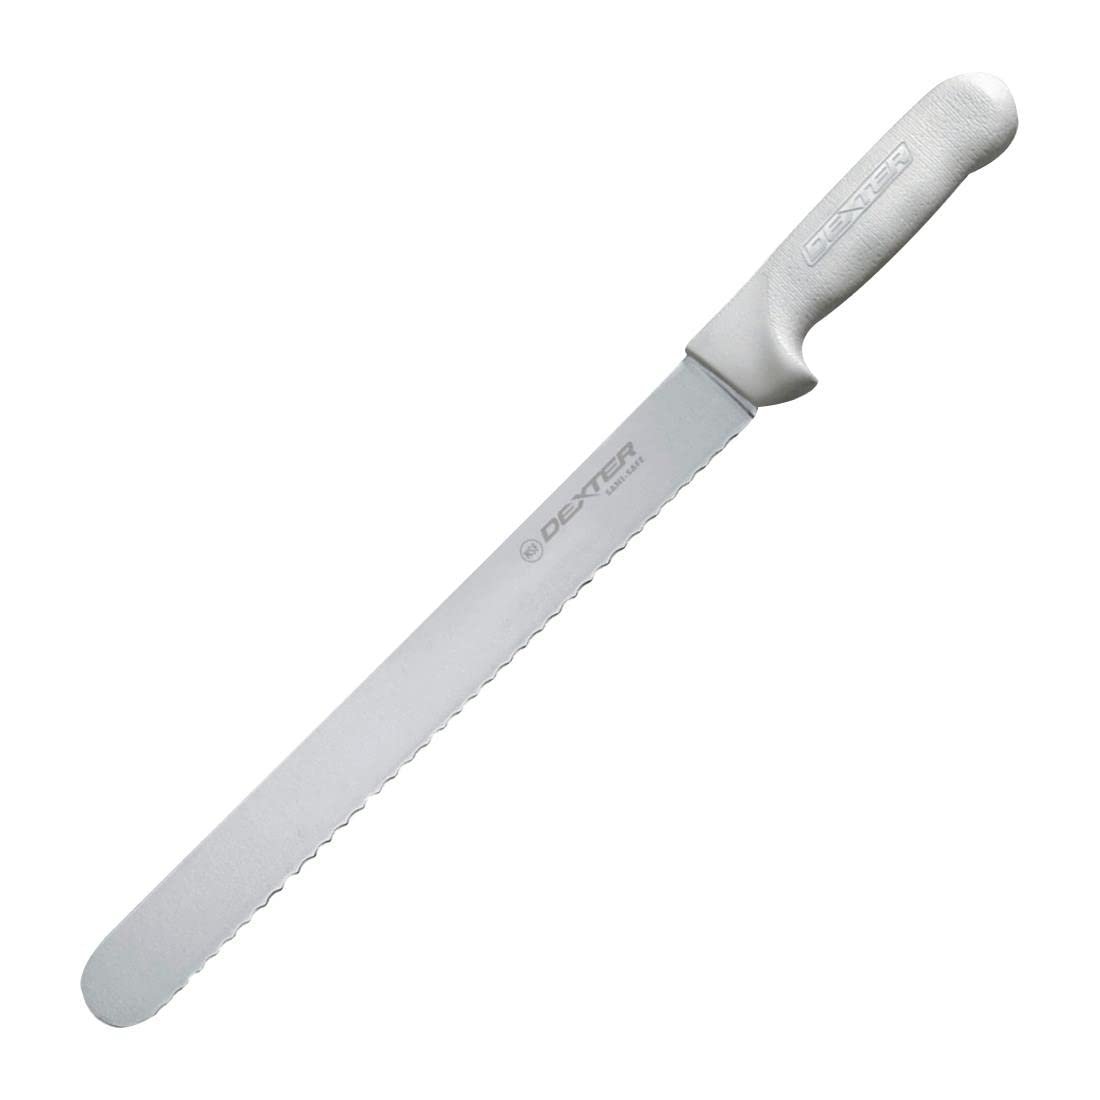  MAIRICO Brisket Slicing Knife - Ultra Sharp Premium 11